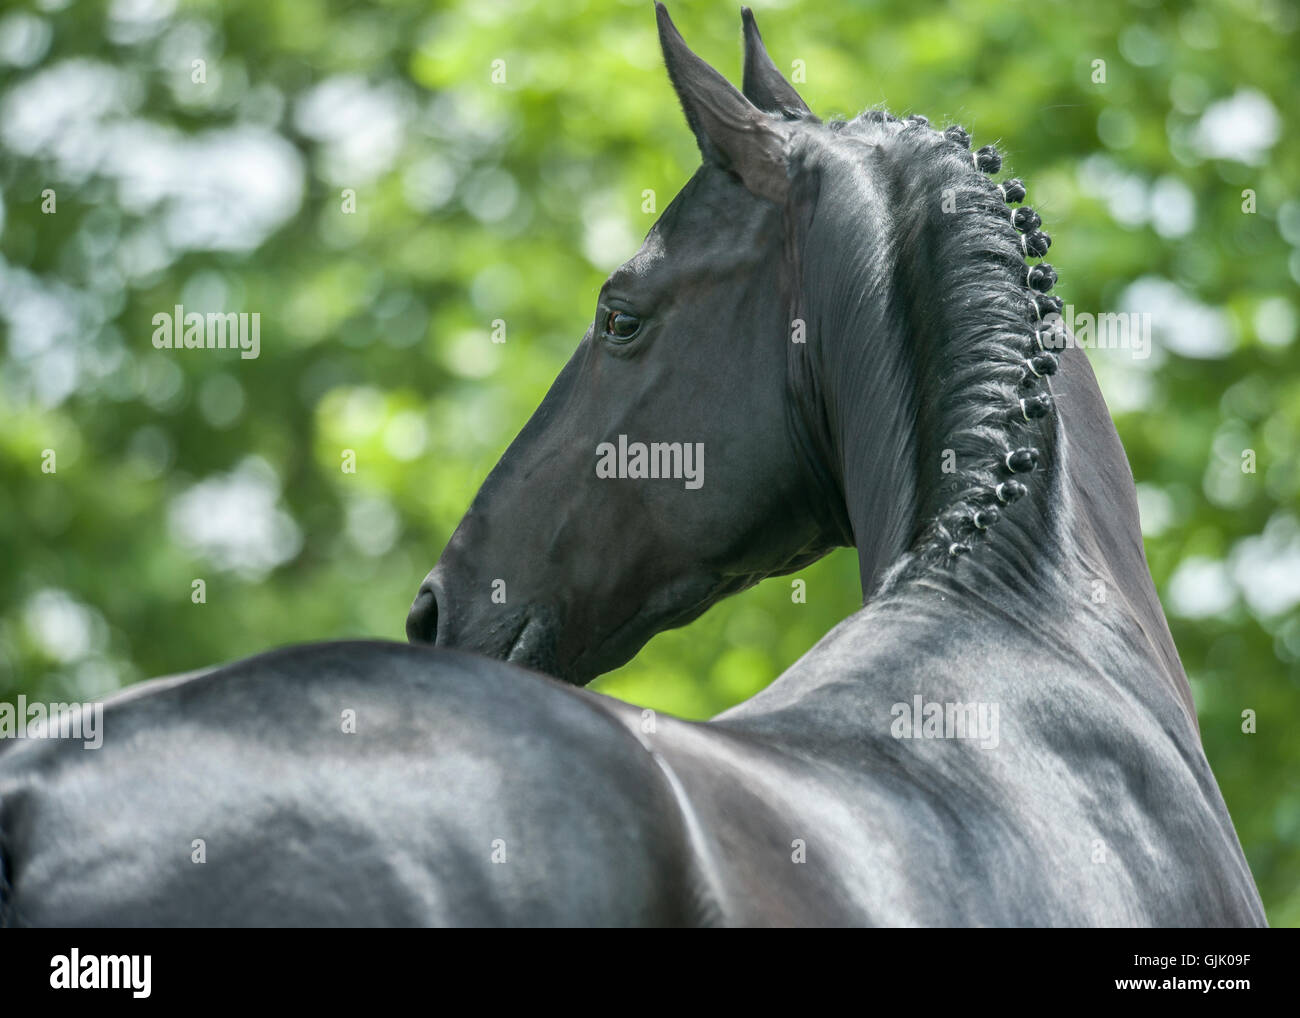 Black Hanovarian Warmblood stallion horse with braided mane Stock Photo